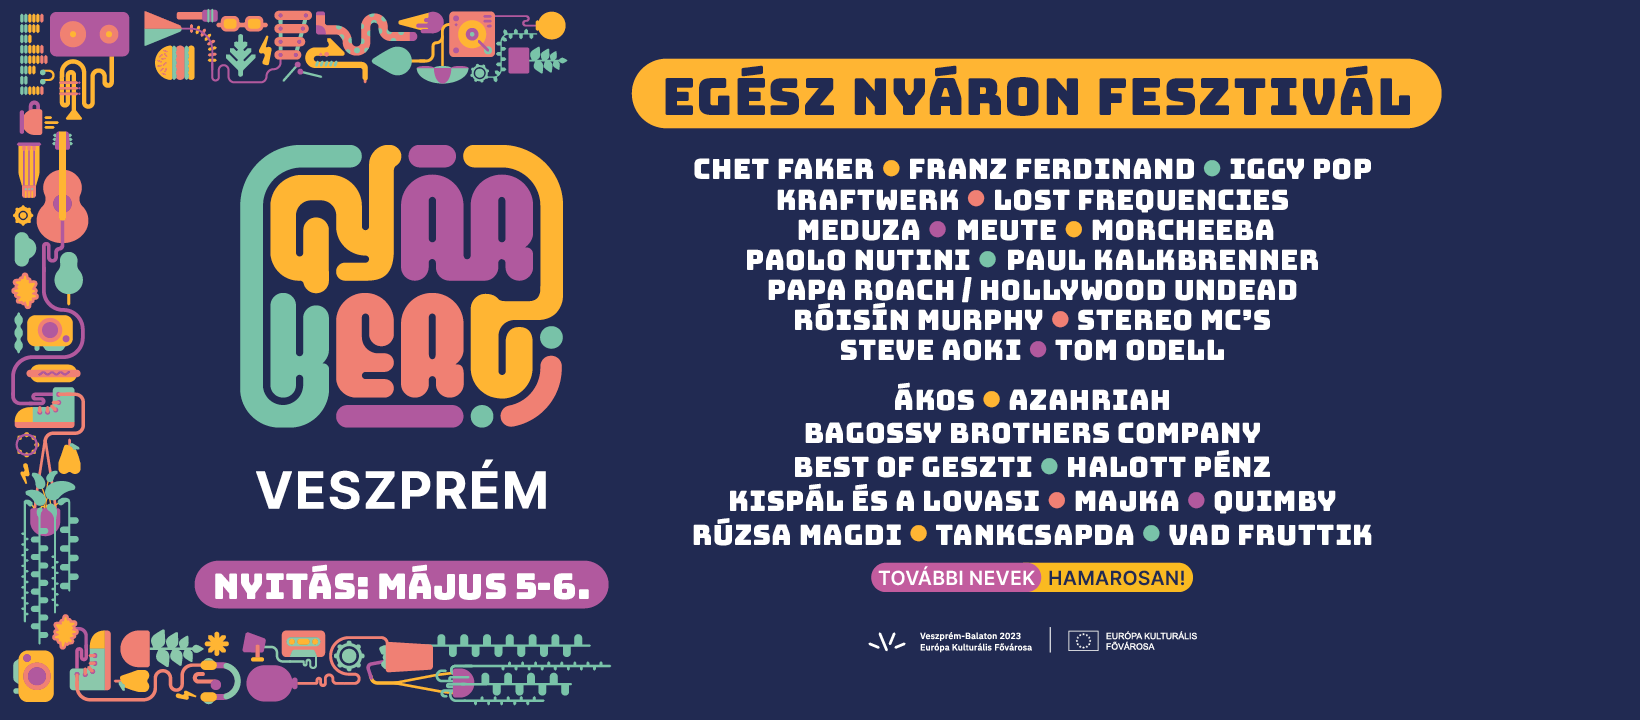 Iggy Pop Concert, Gyárkert, Veszprém, 30 July